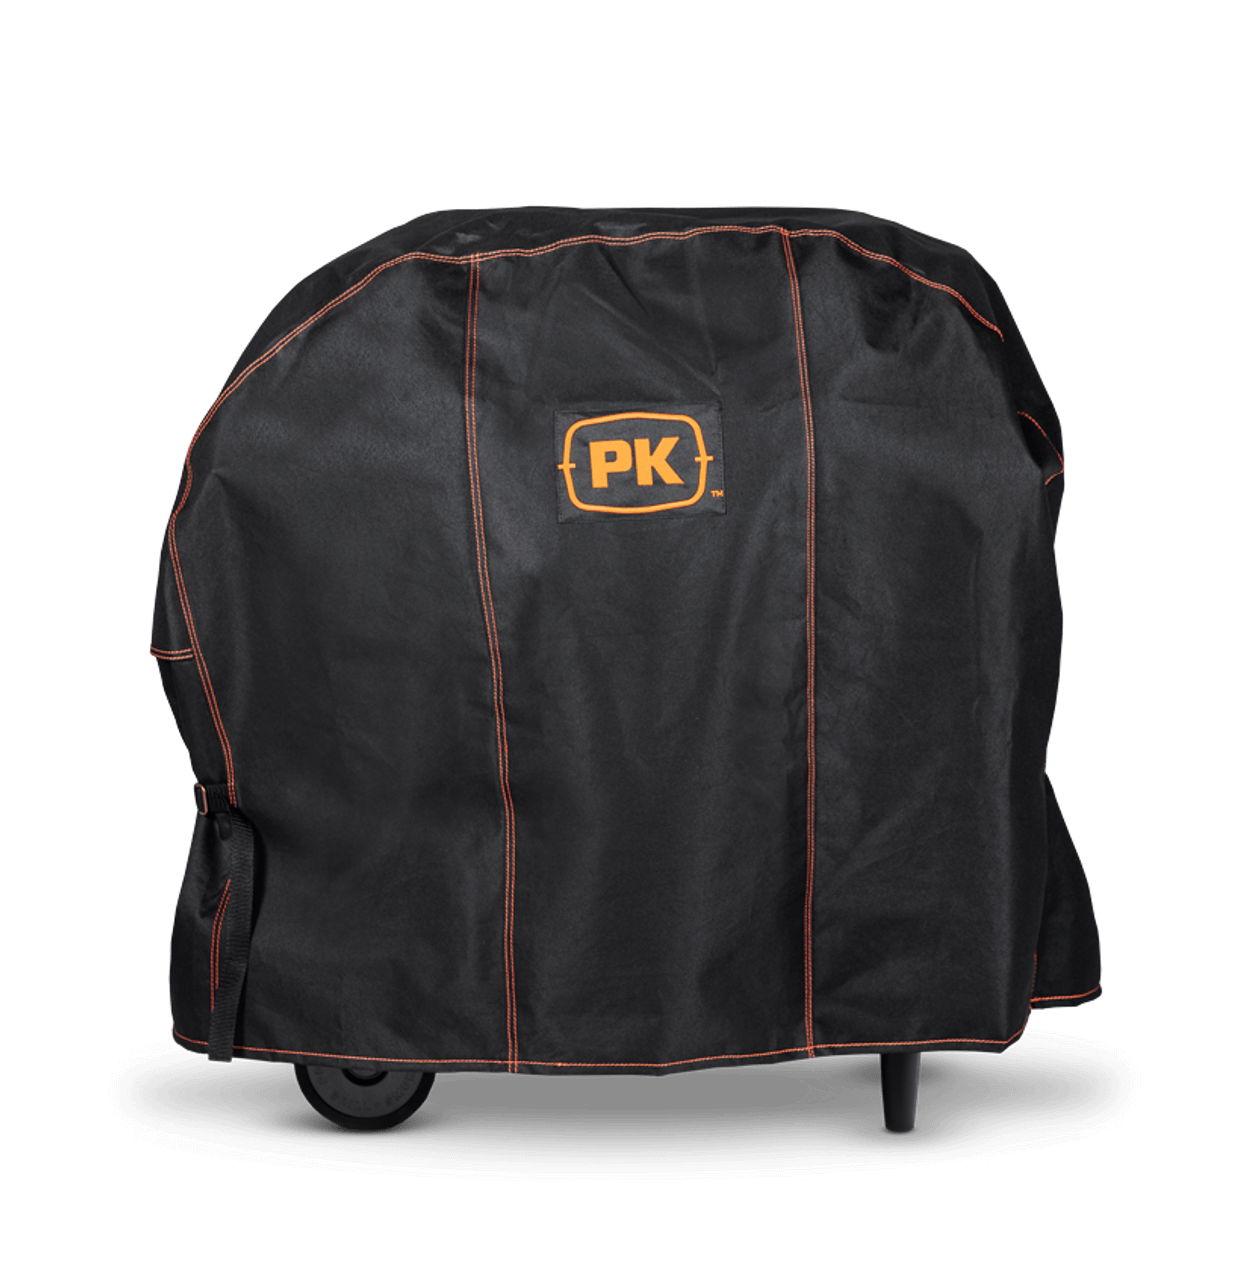 PK300 Slim Grill Cover